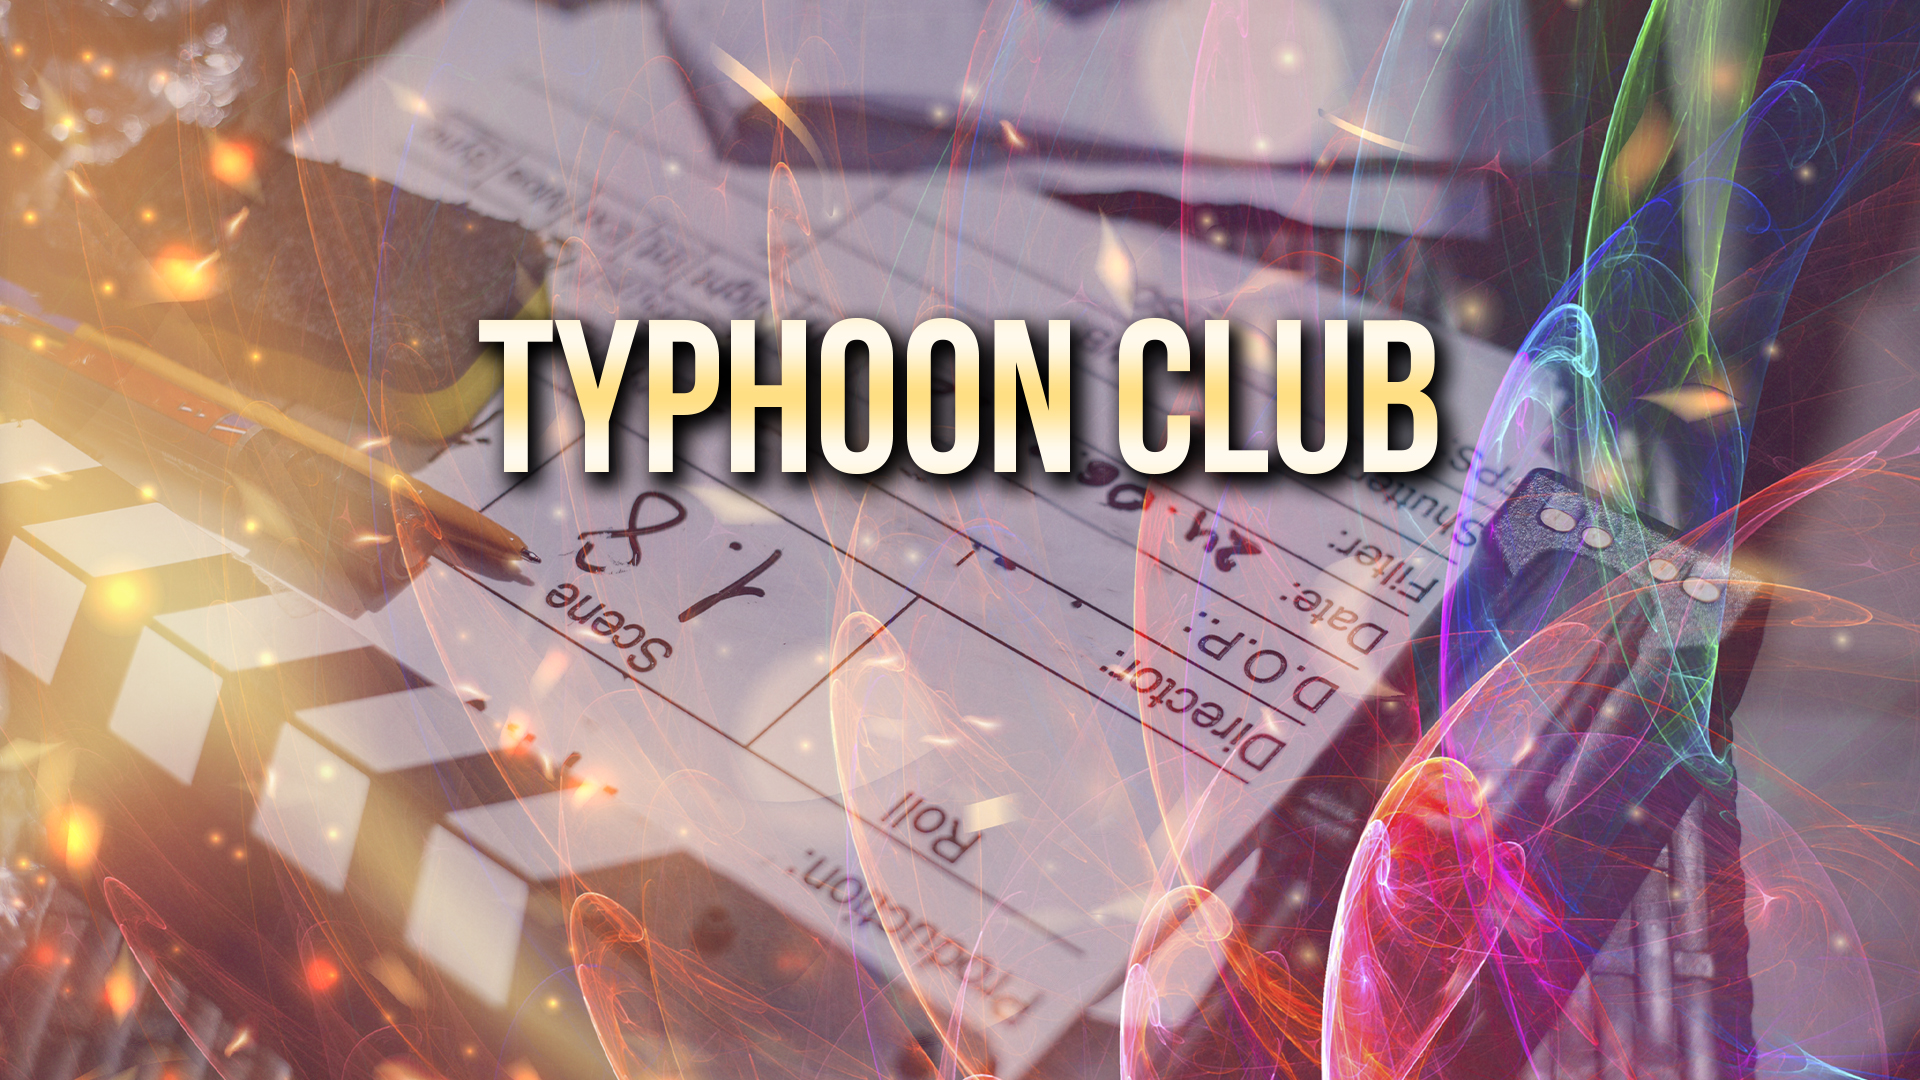 Typhoon Club Ending Explained [SPOILER!]